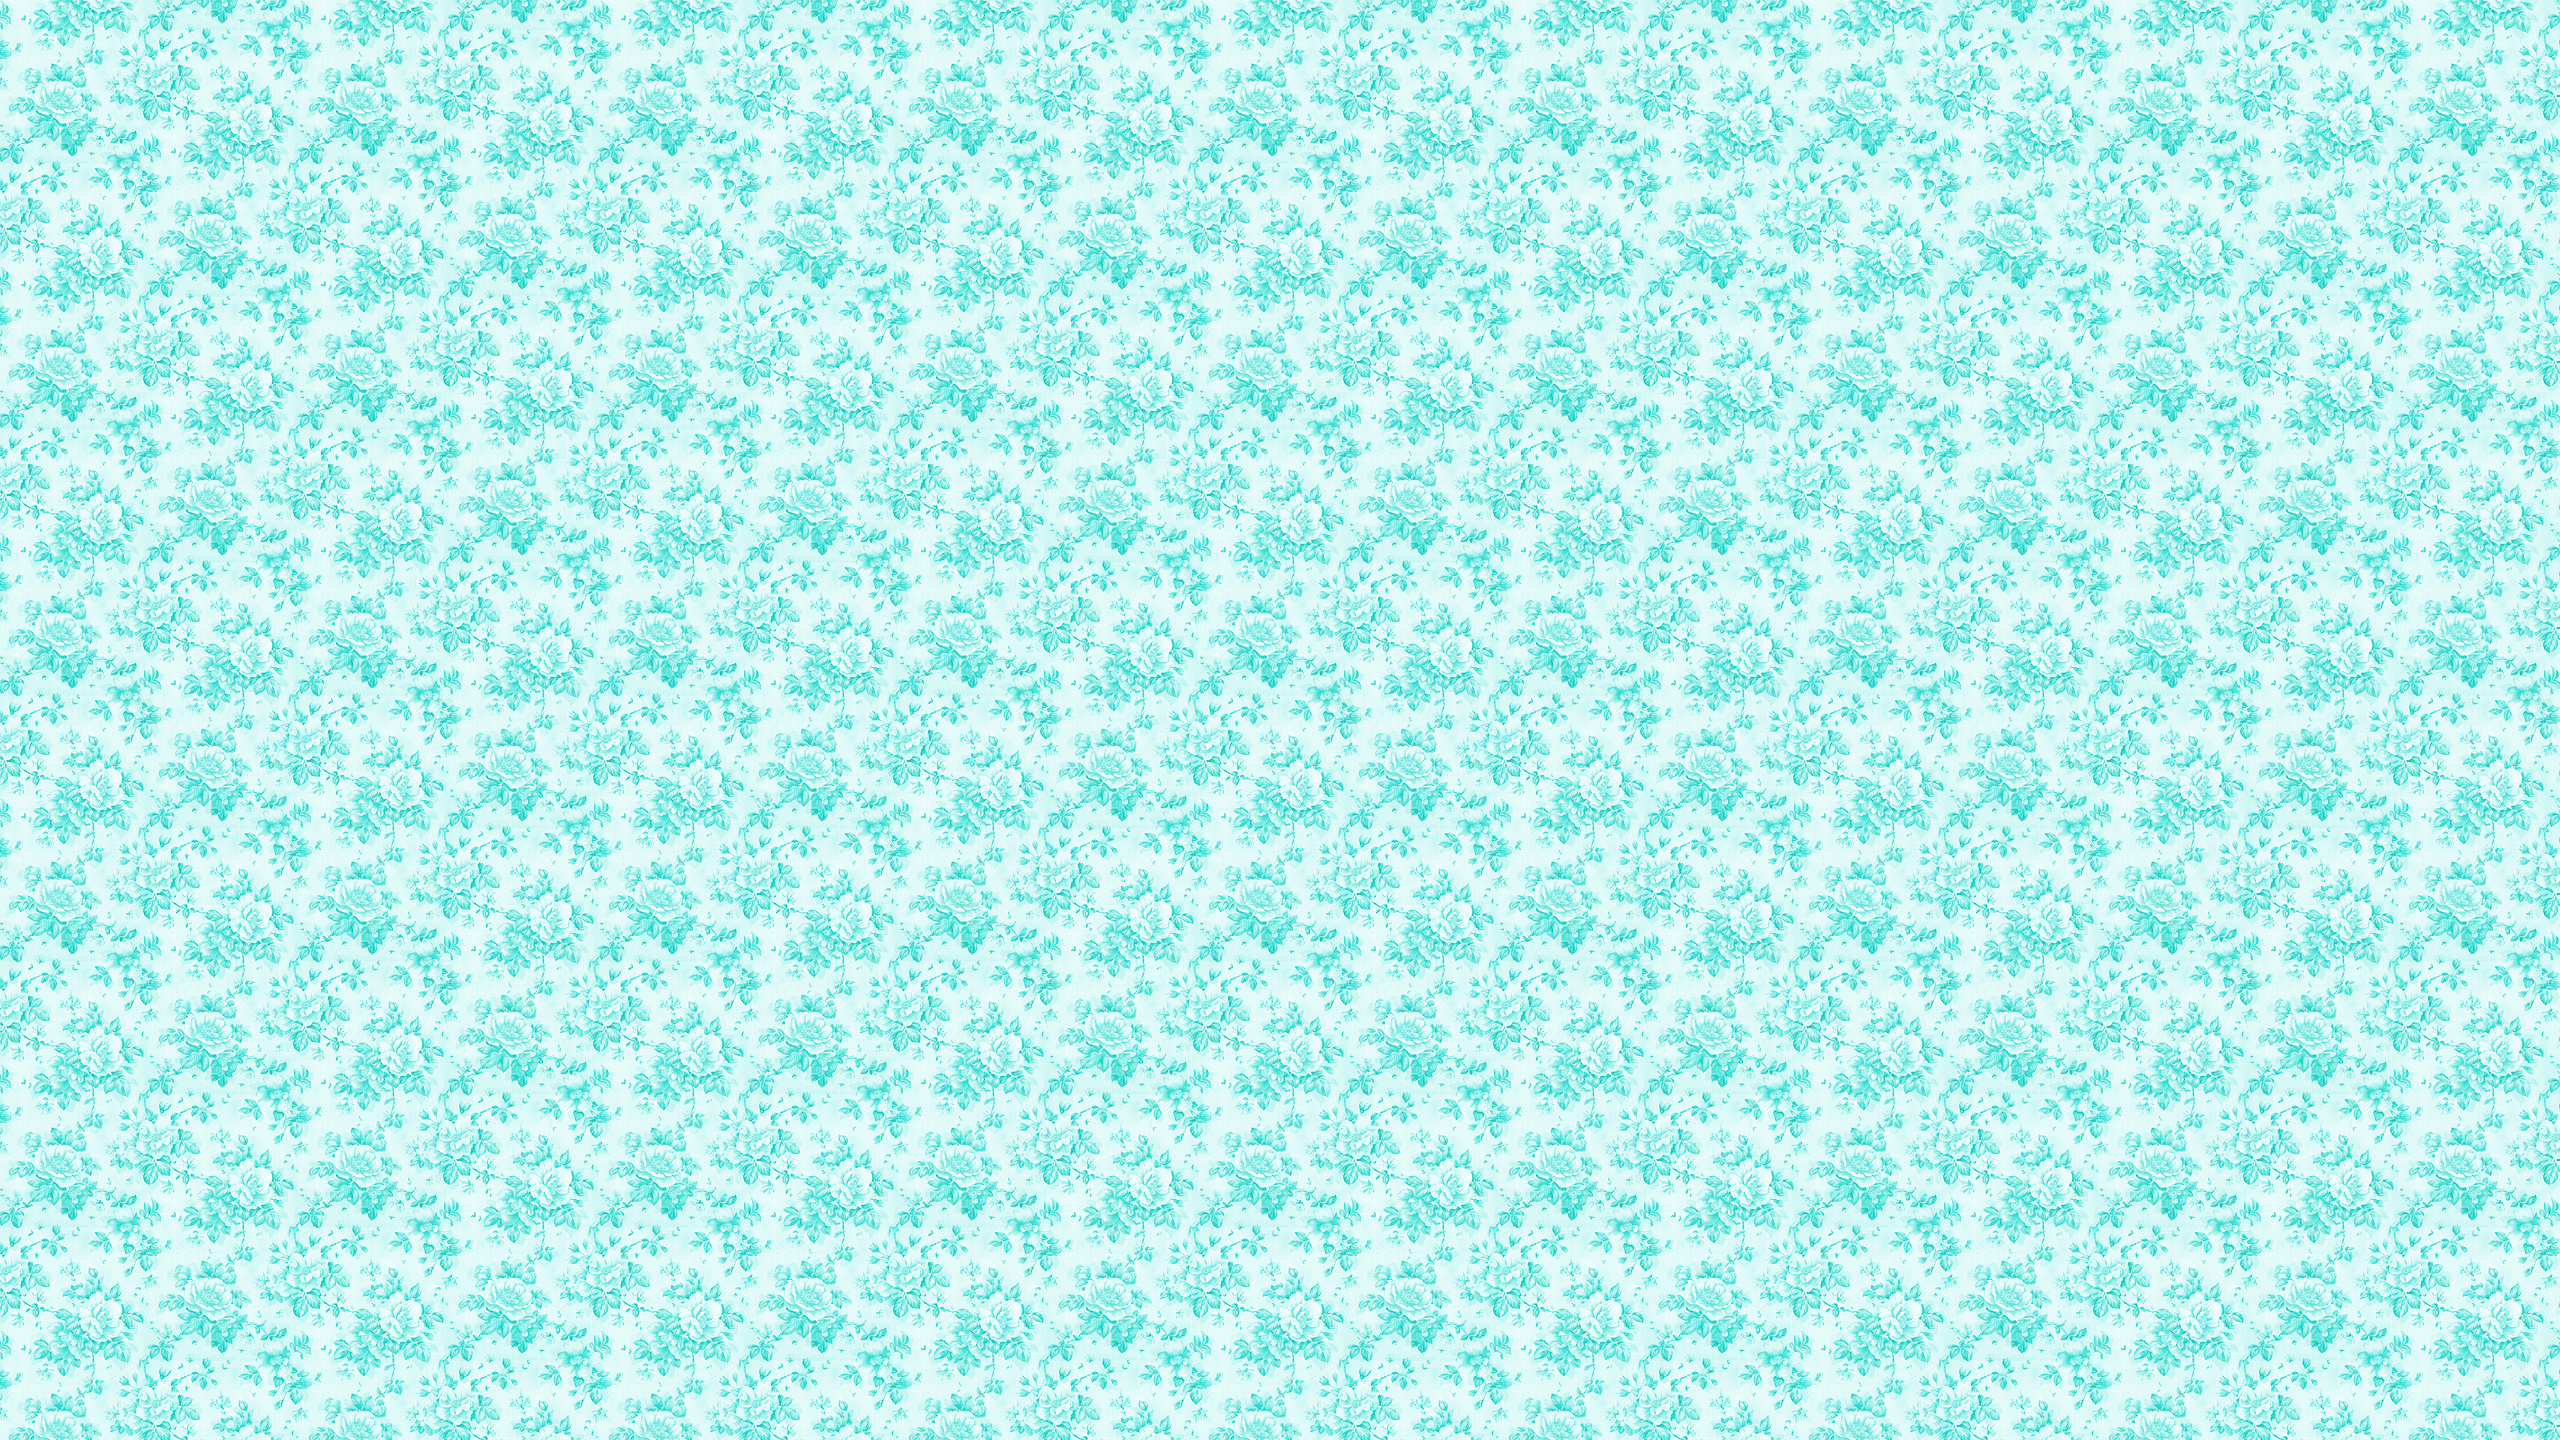 Mint Green Desktop Wallpaper, Free Stock Wallpaper